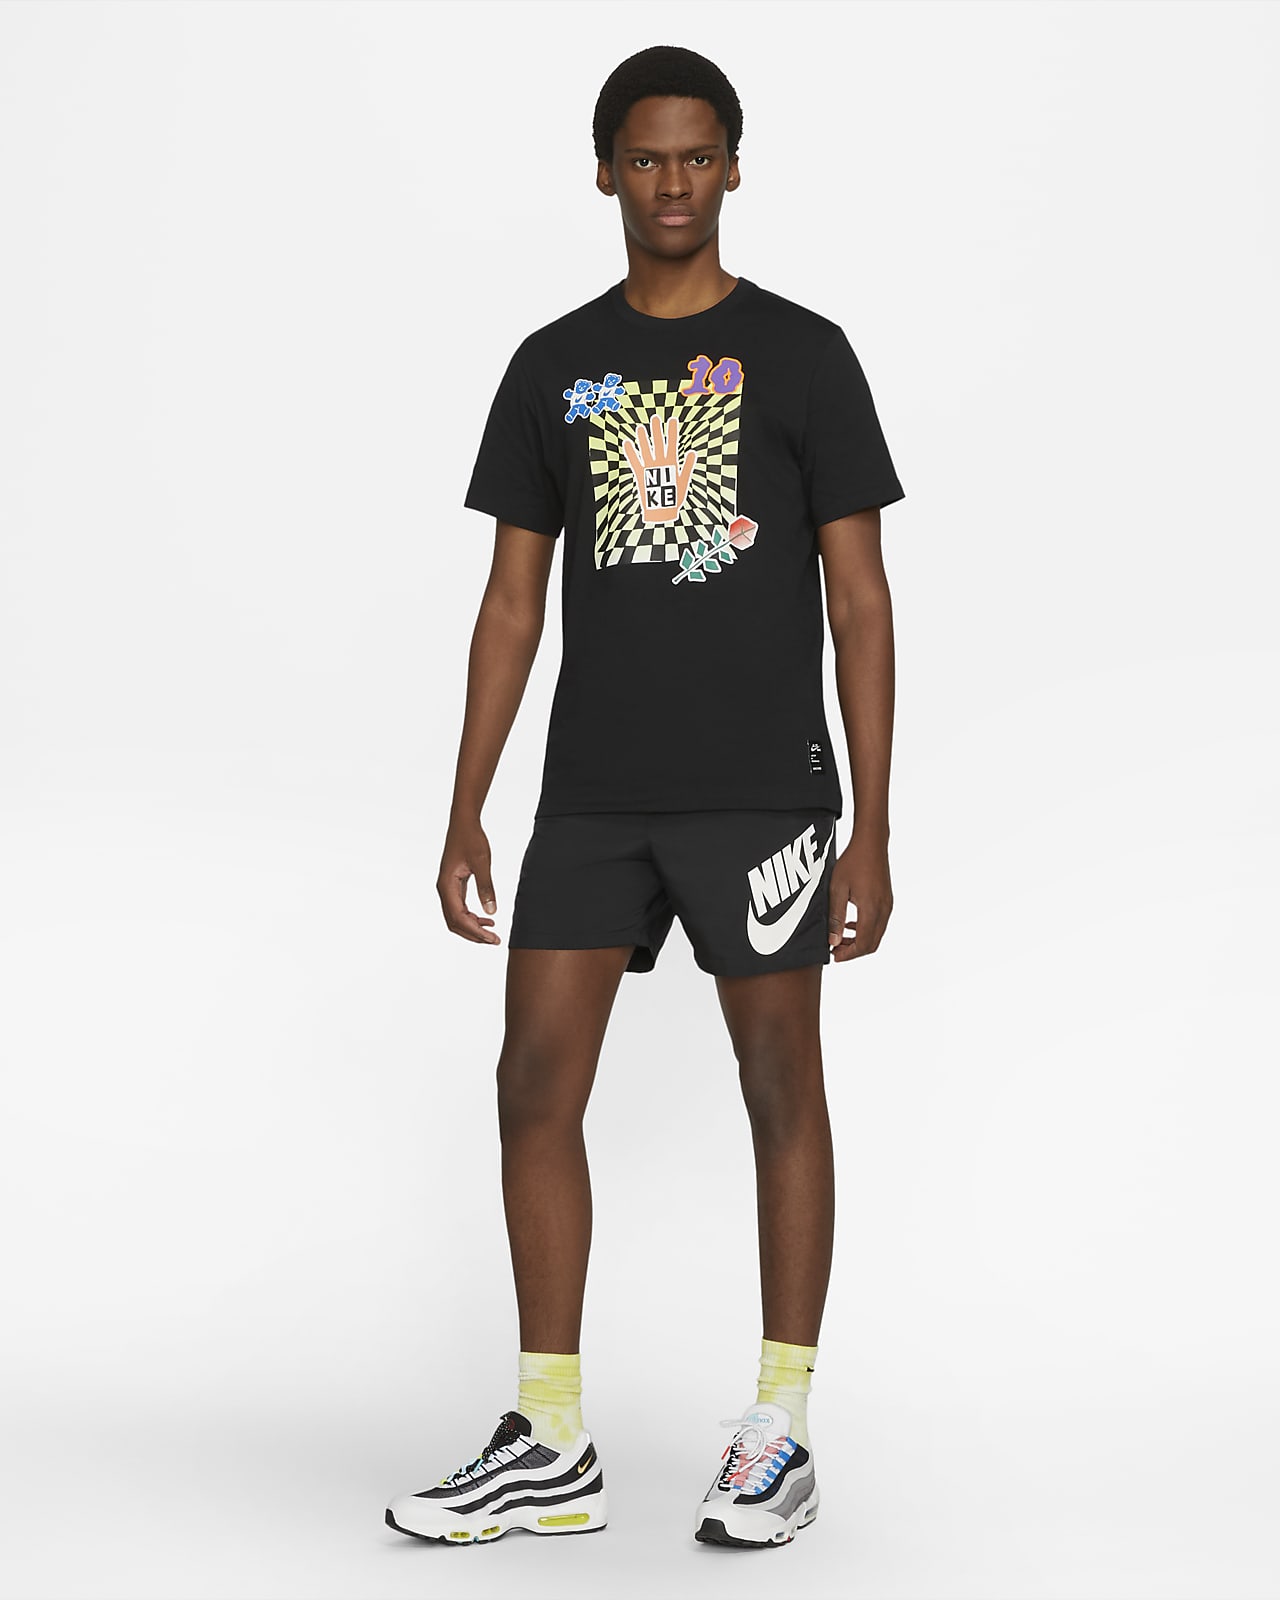 Nike Sportswear A.I.R. Machine Men's T-Shirt